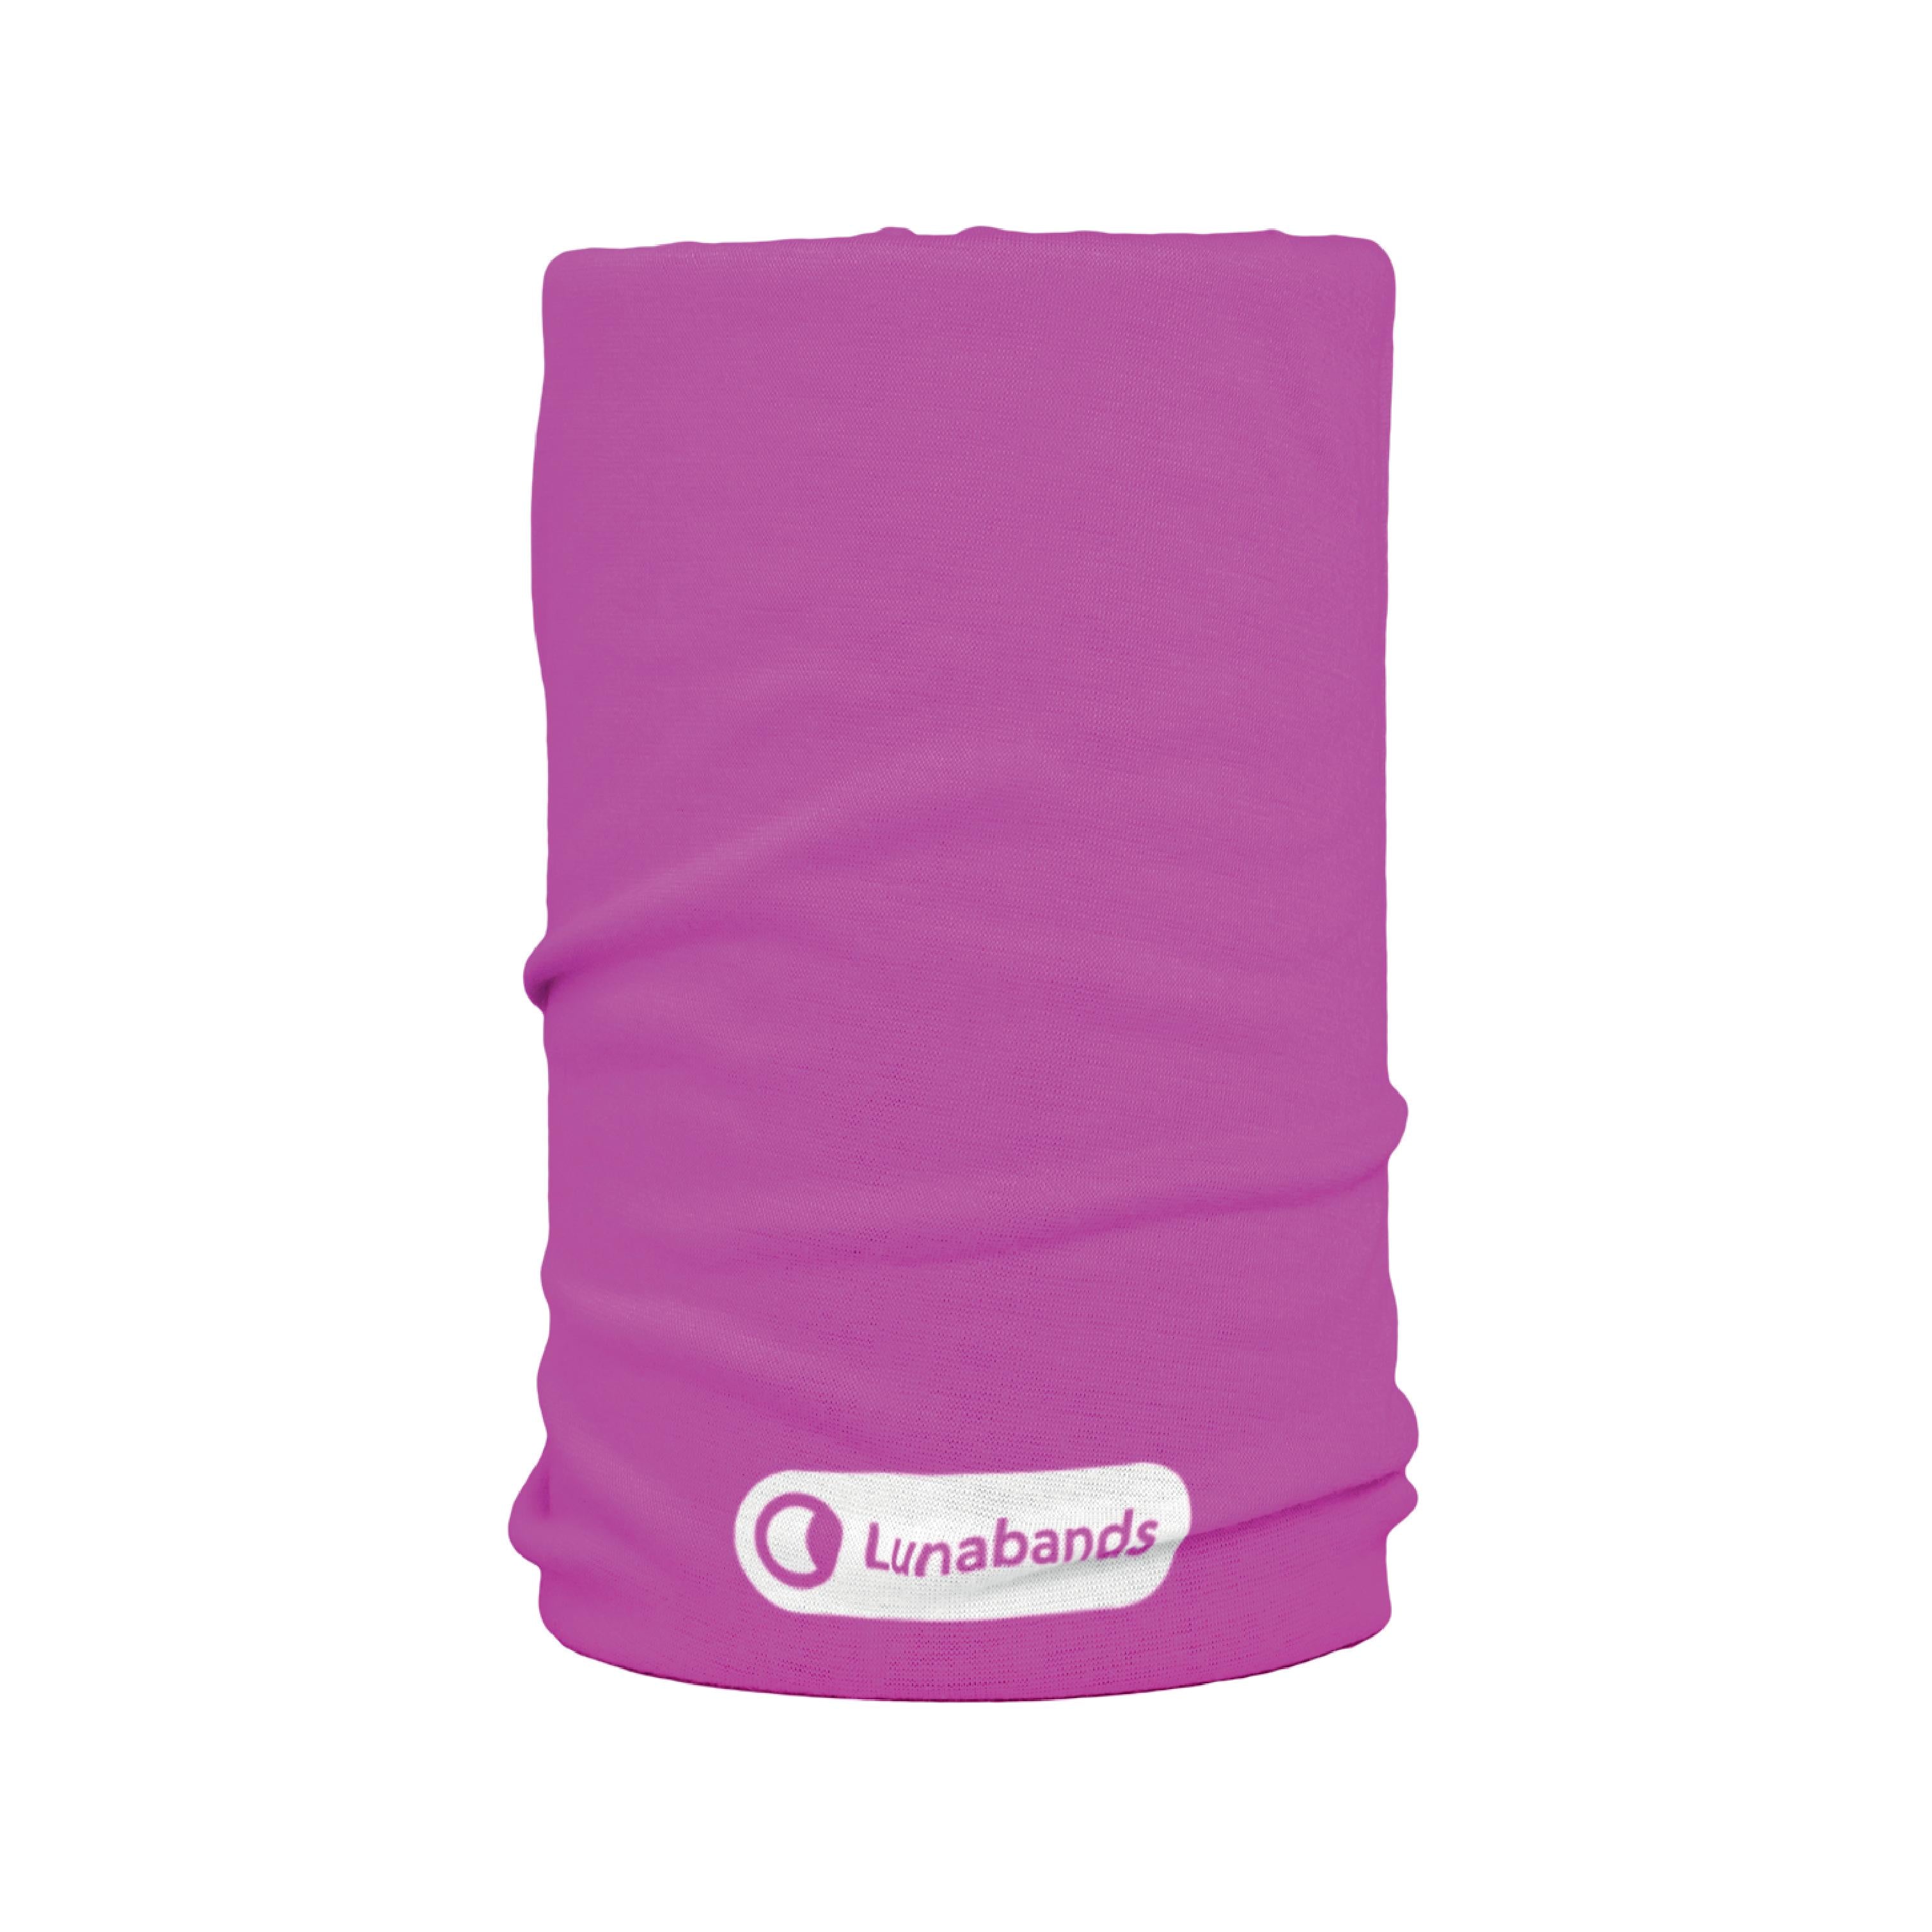 Lunabands Designer Pink Block colour Multi Use Multifunctional Running Sports Fitness Yoga Gym Bandana Headband Headbands